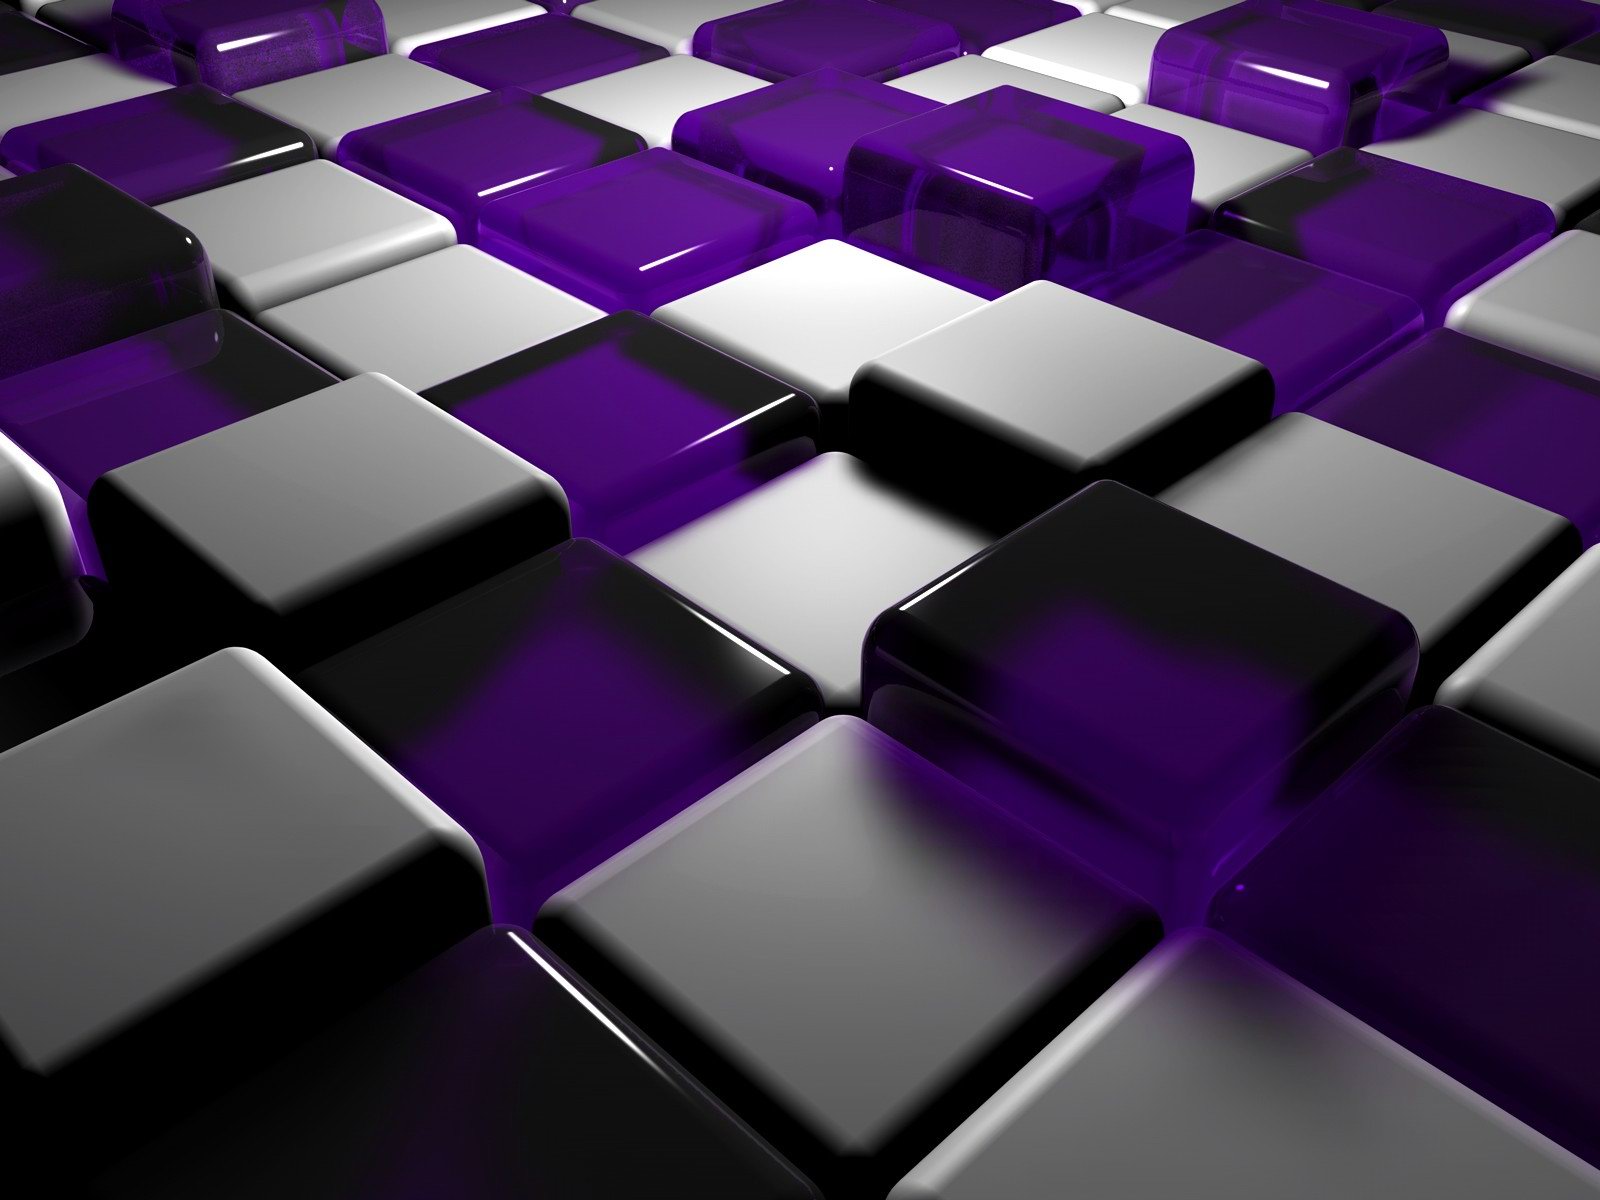 3d Cubes Purple 0120 1600x1200 Pixel Hd Wallpaper